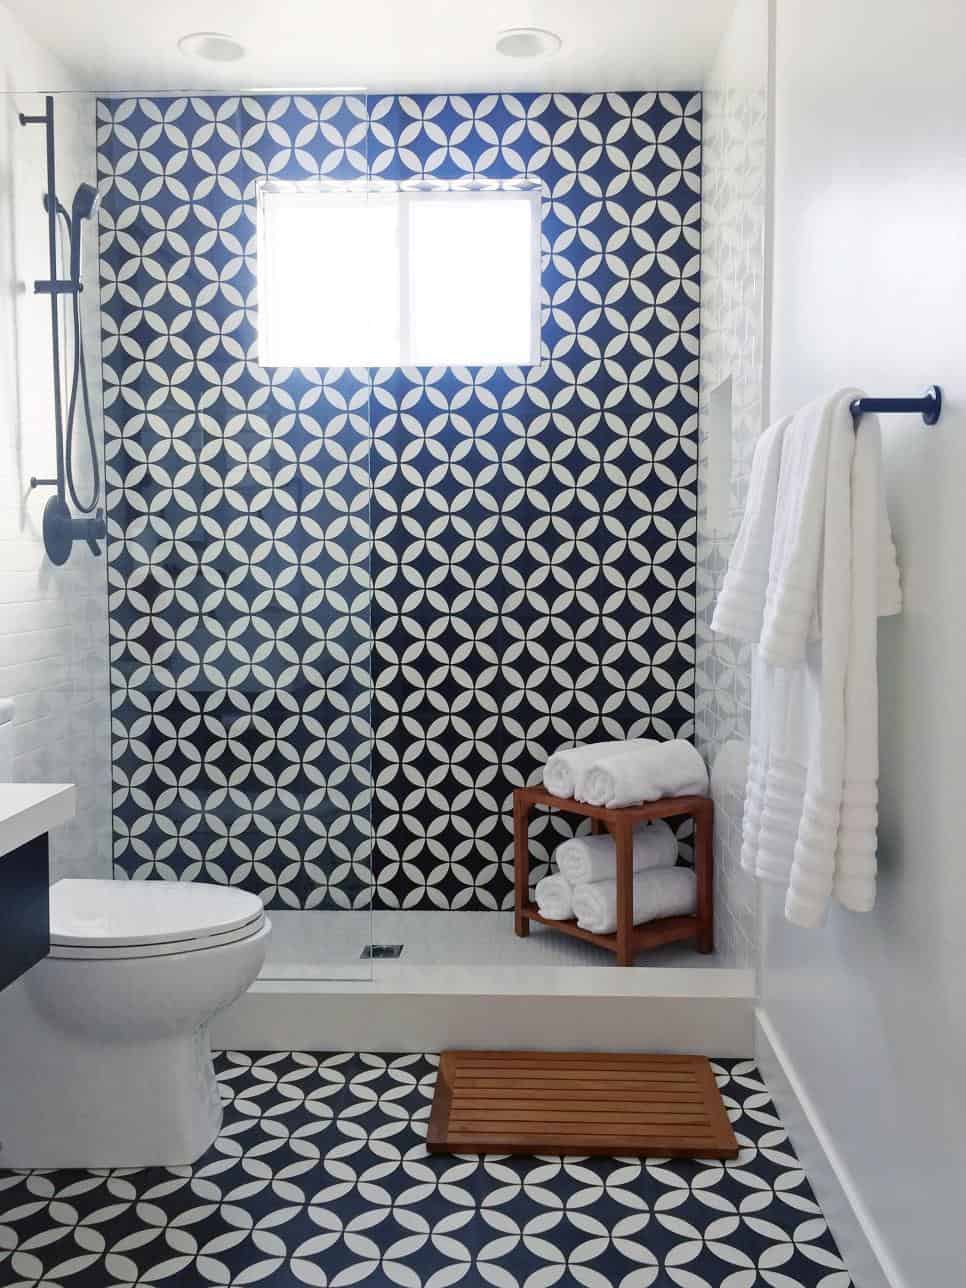 Tiled bath by Lindye Galloway